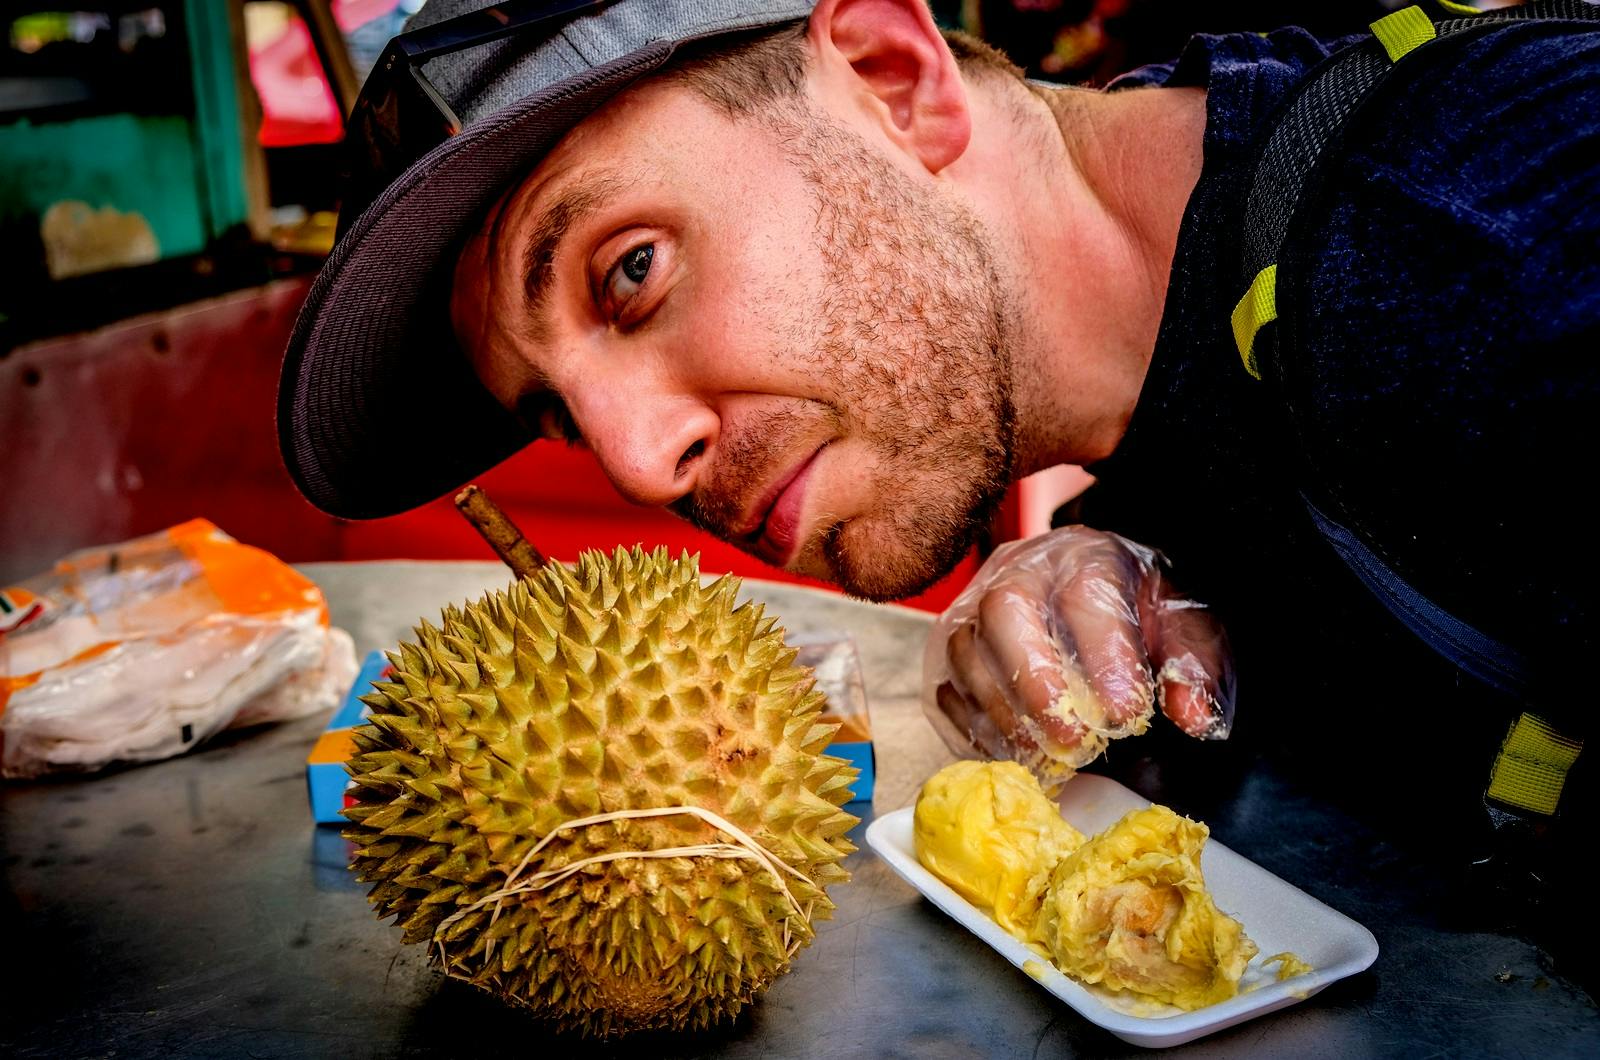 Private Kuala Lumpur night market and food tour